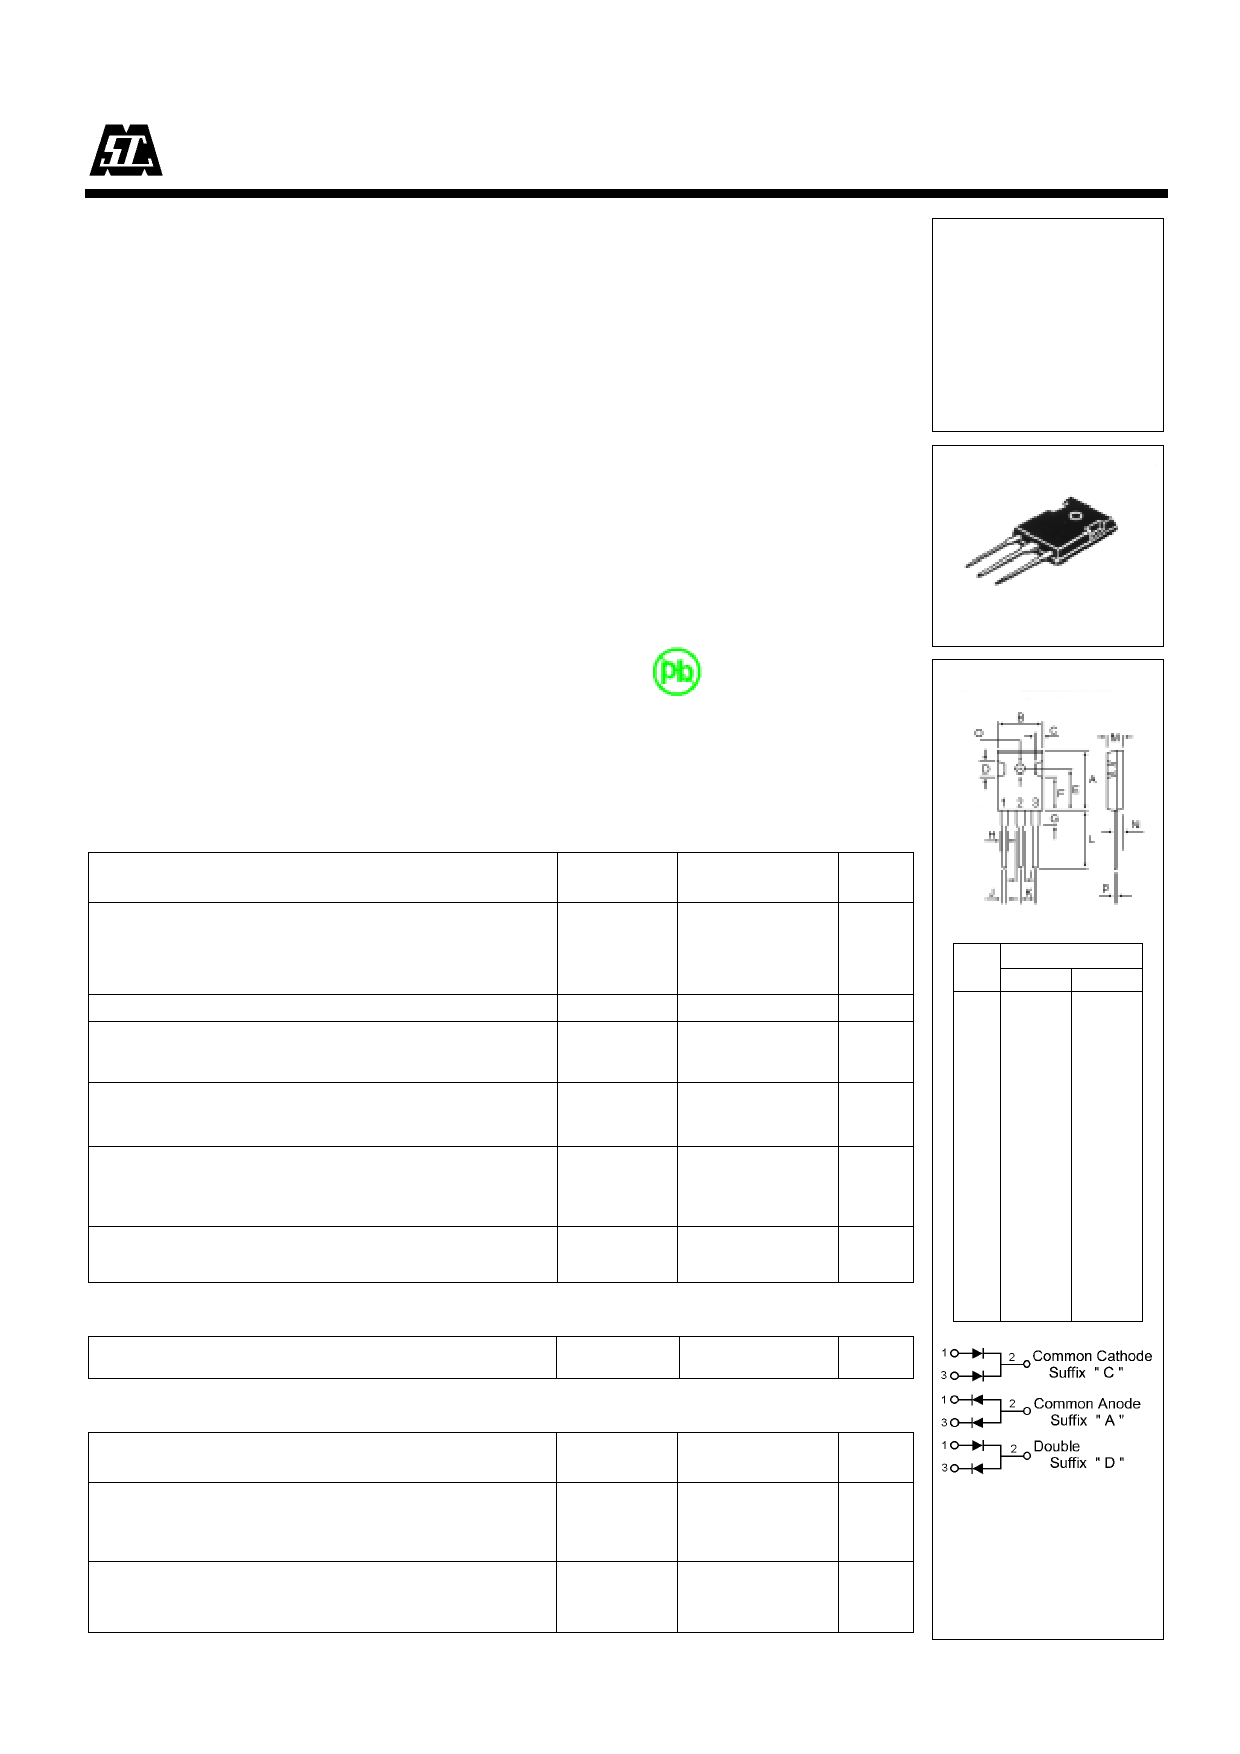 MBR20150PT datasheet, circuit